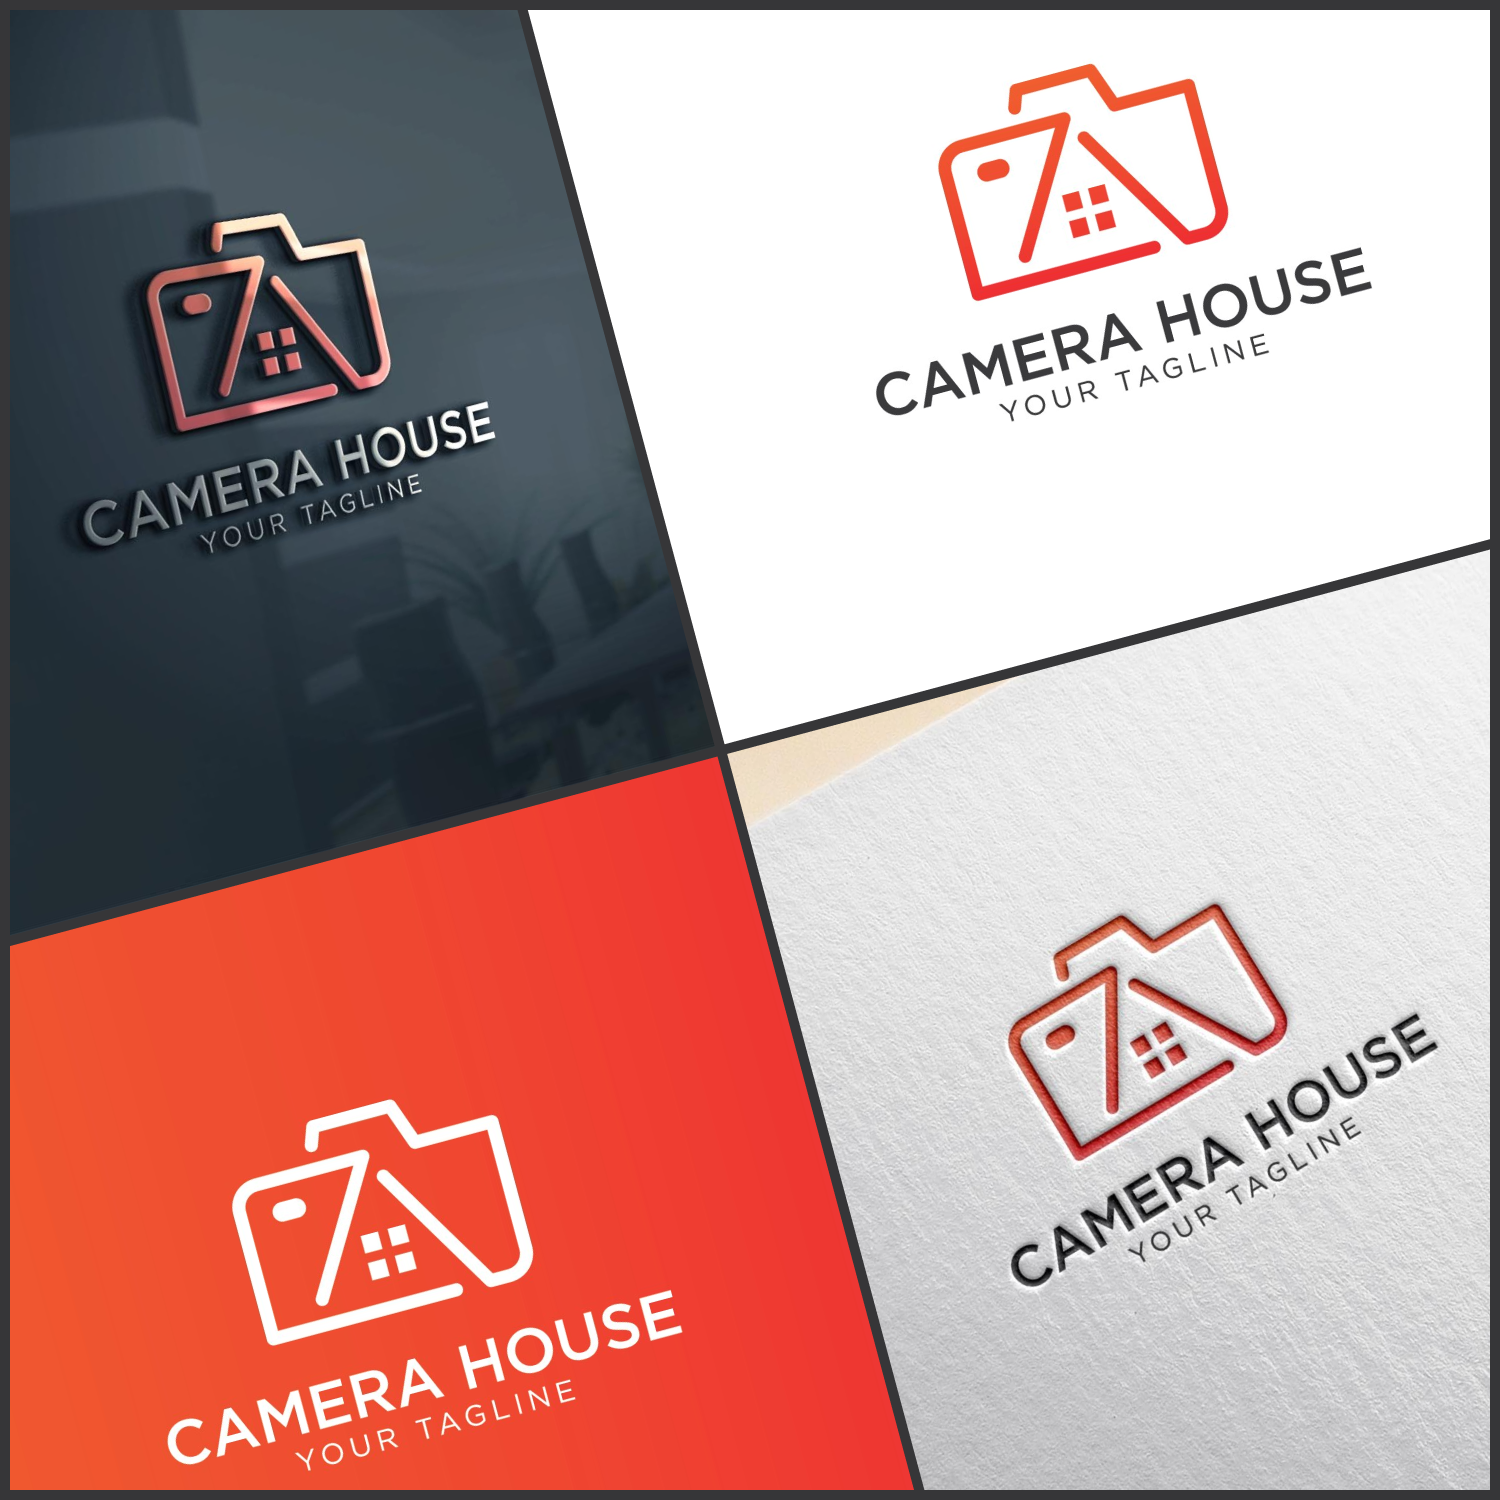 Prints of camera house logo.